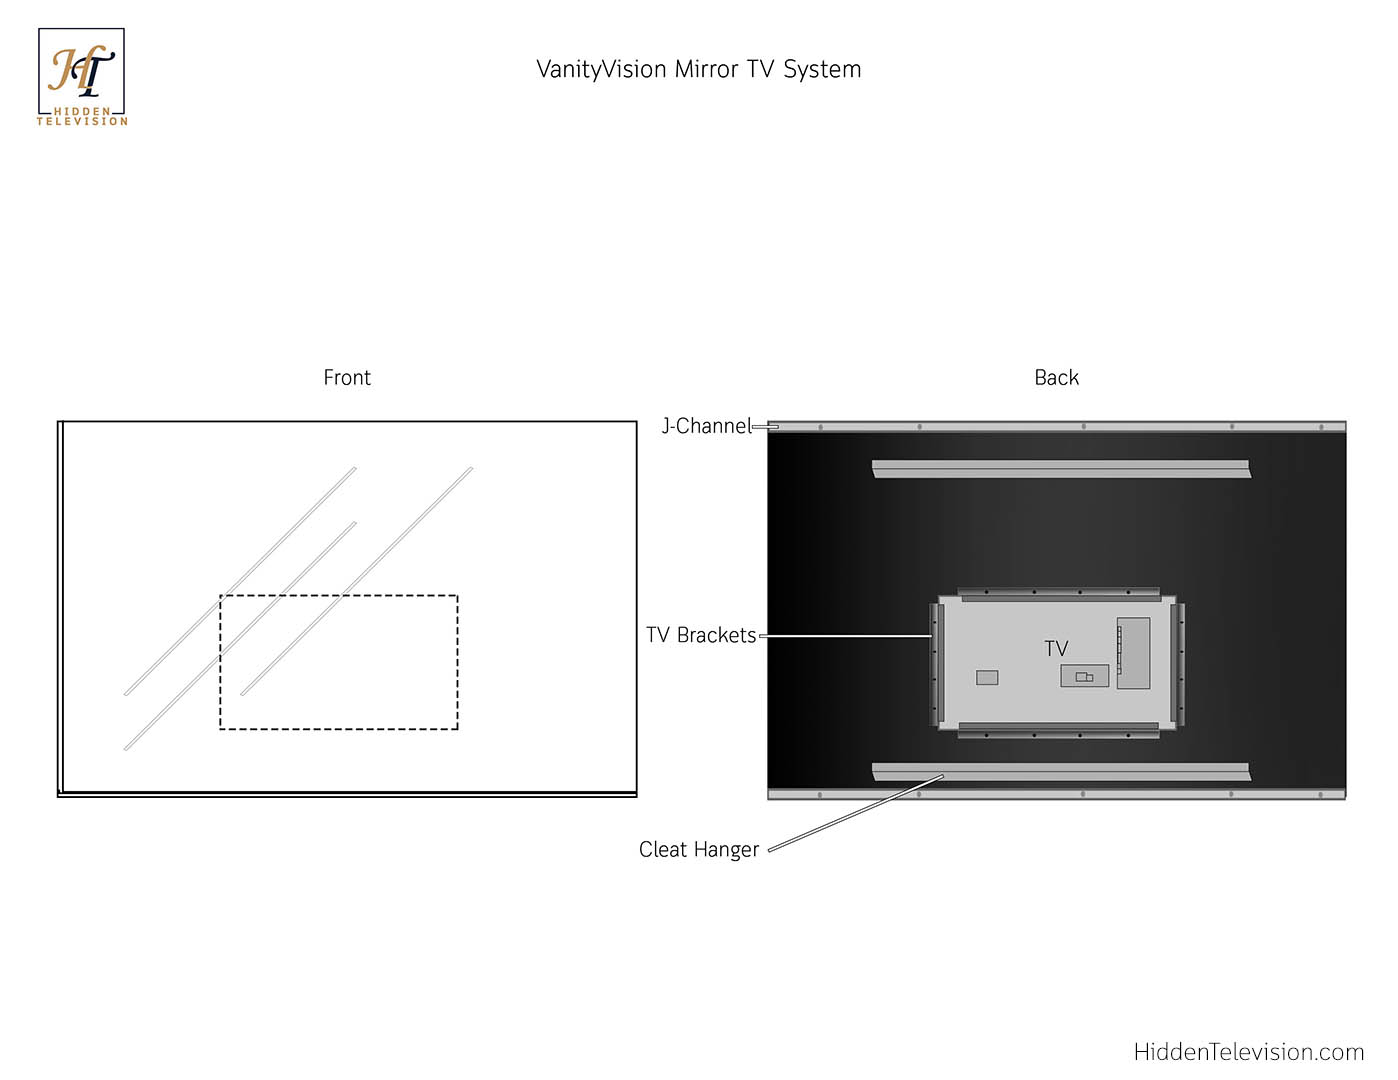 VanityVision Mirror TV Technical Specification - Horizontal